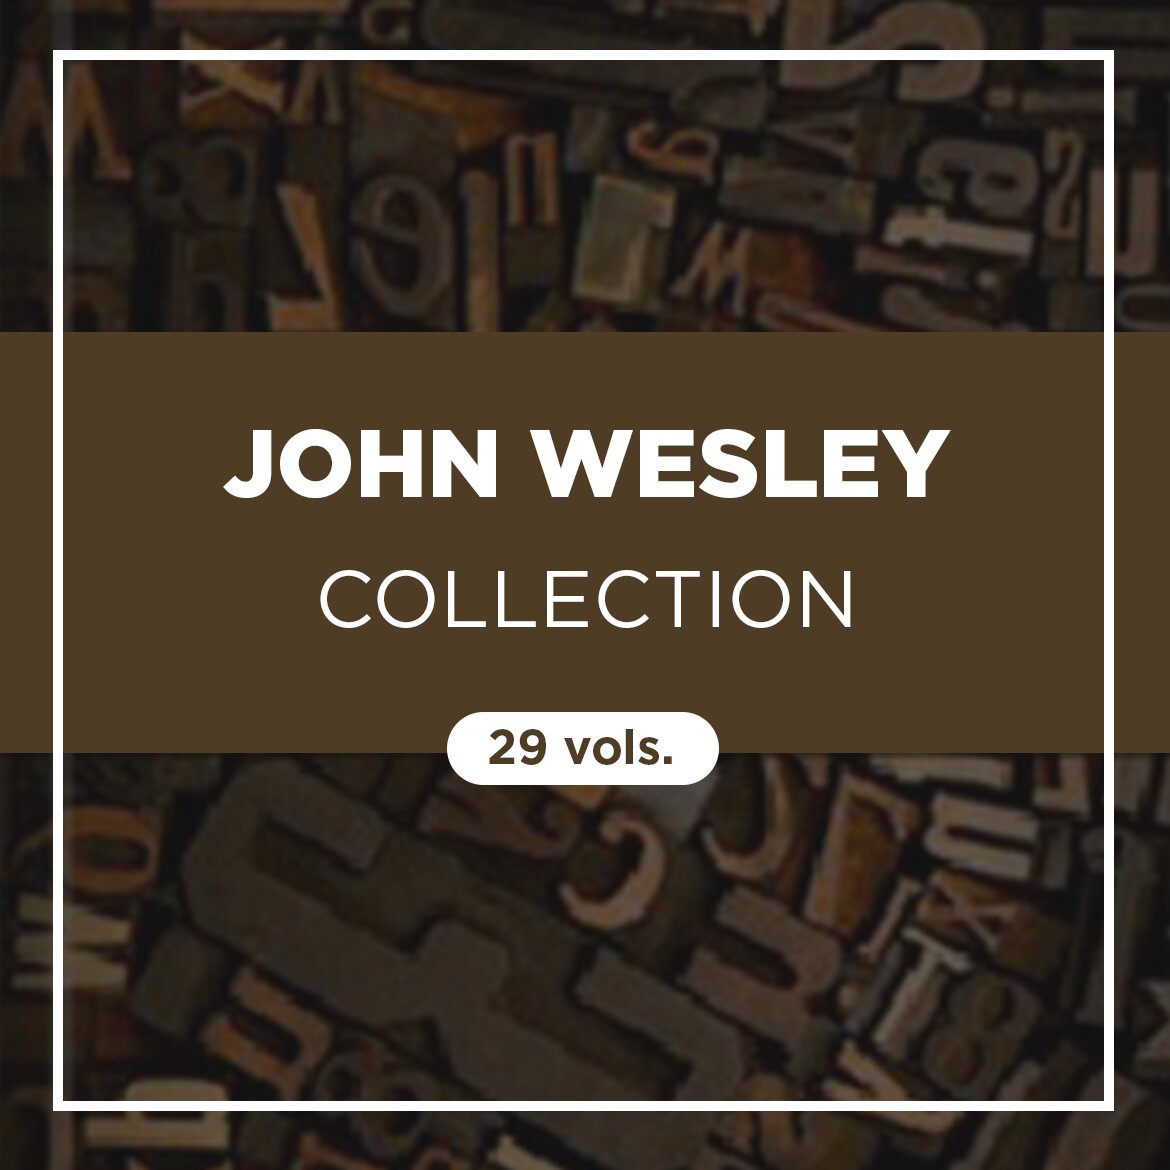 John Wesley Collection (29 vols.)